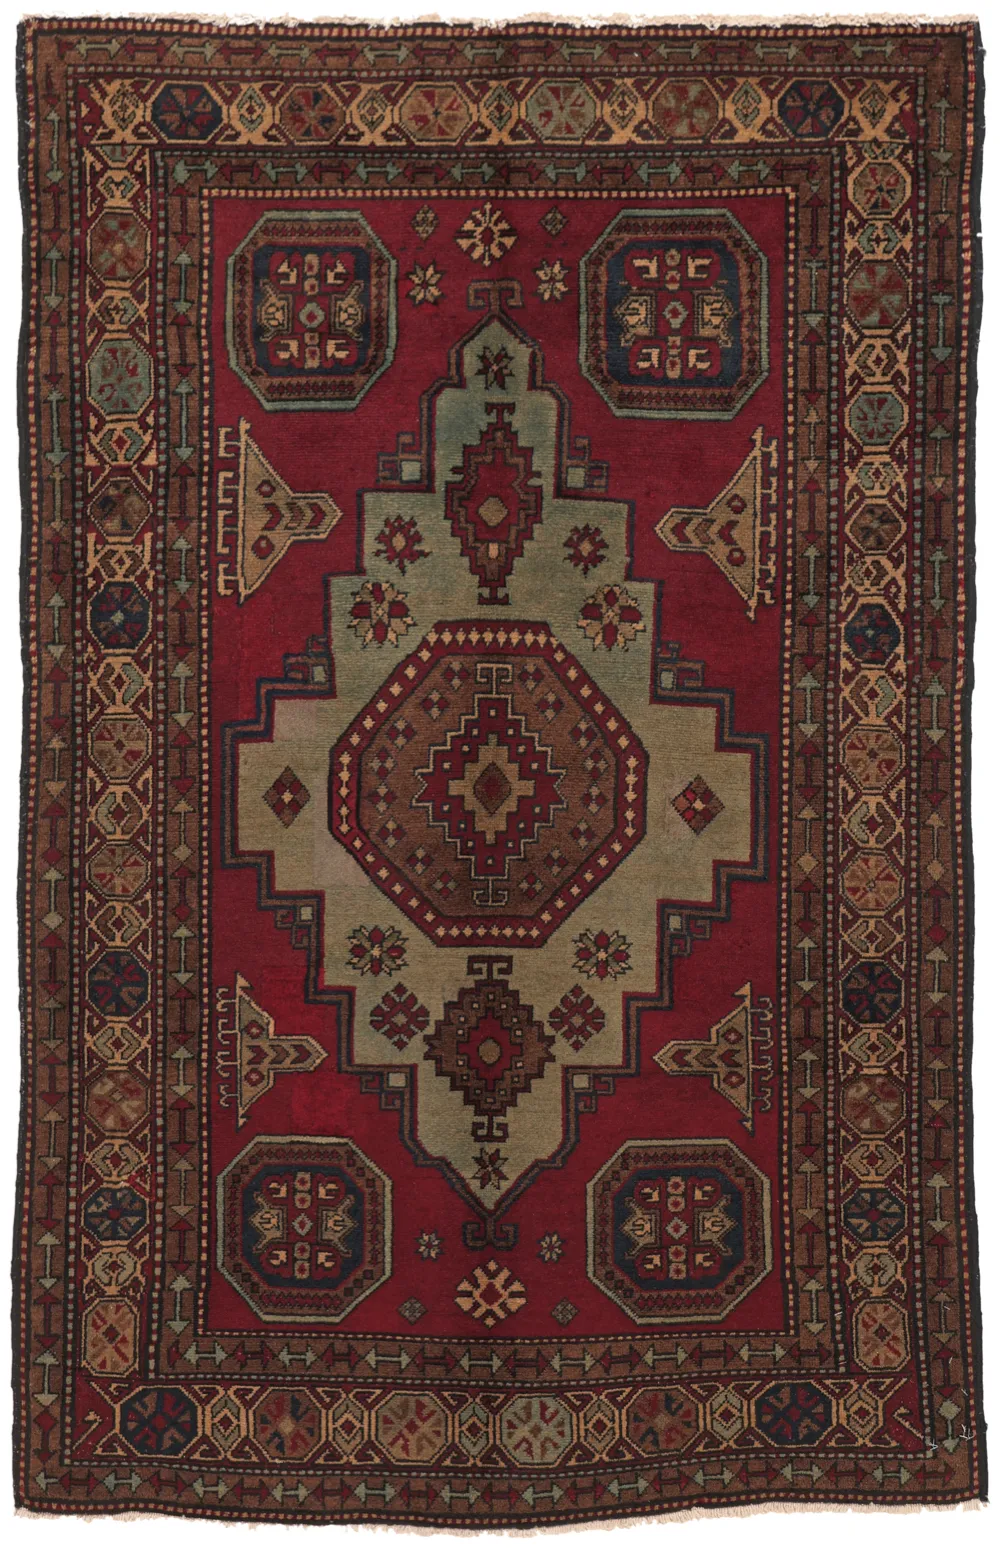 Azerbaijan rug